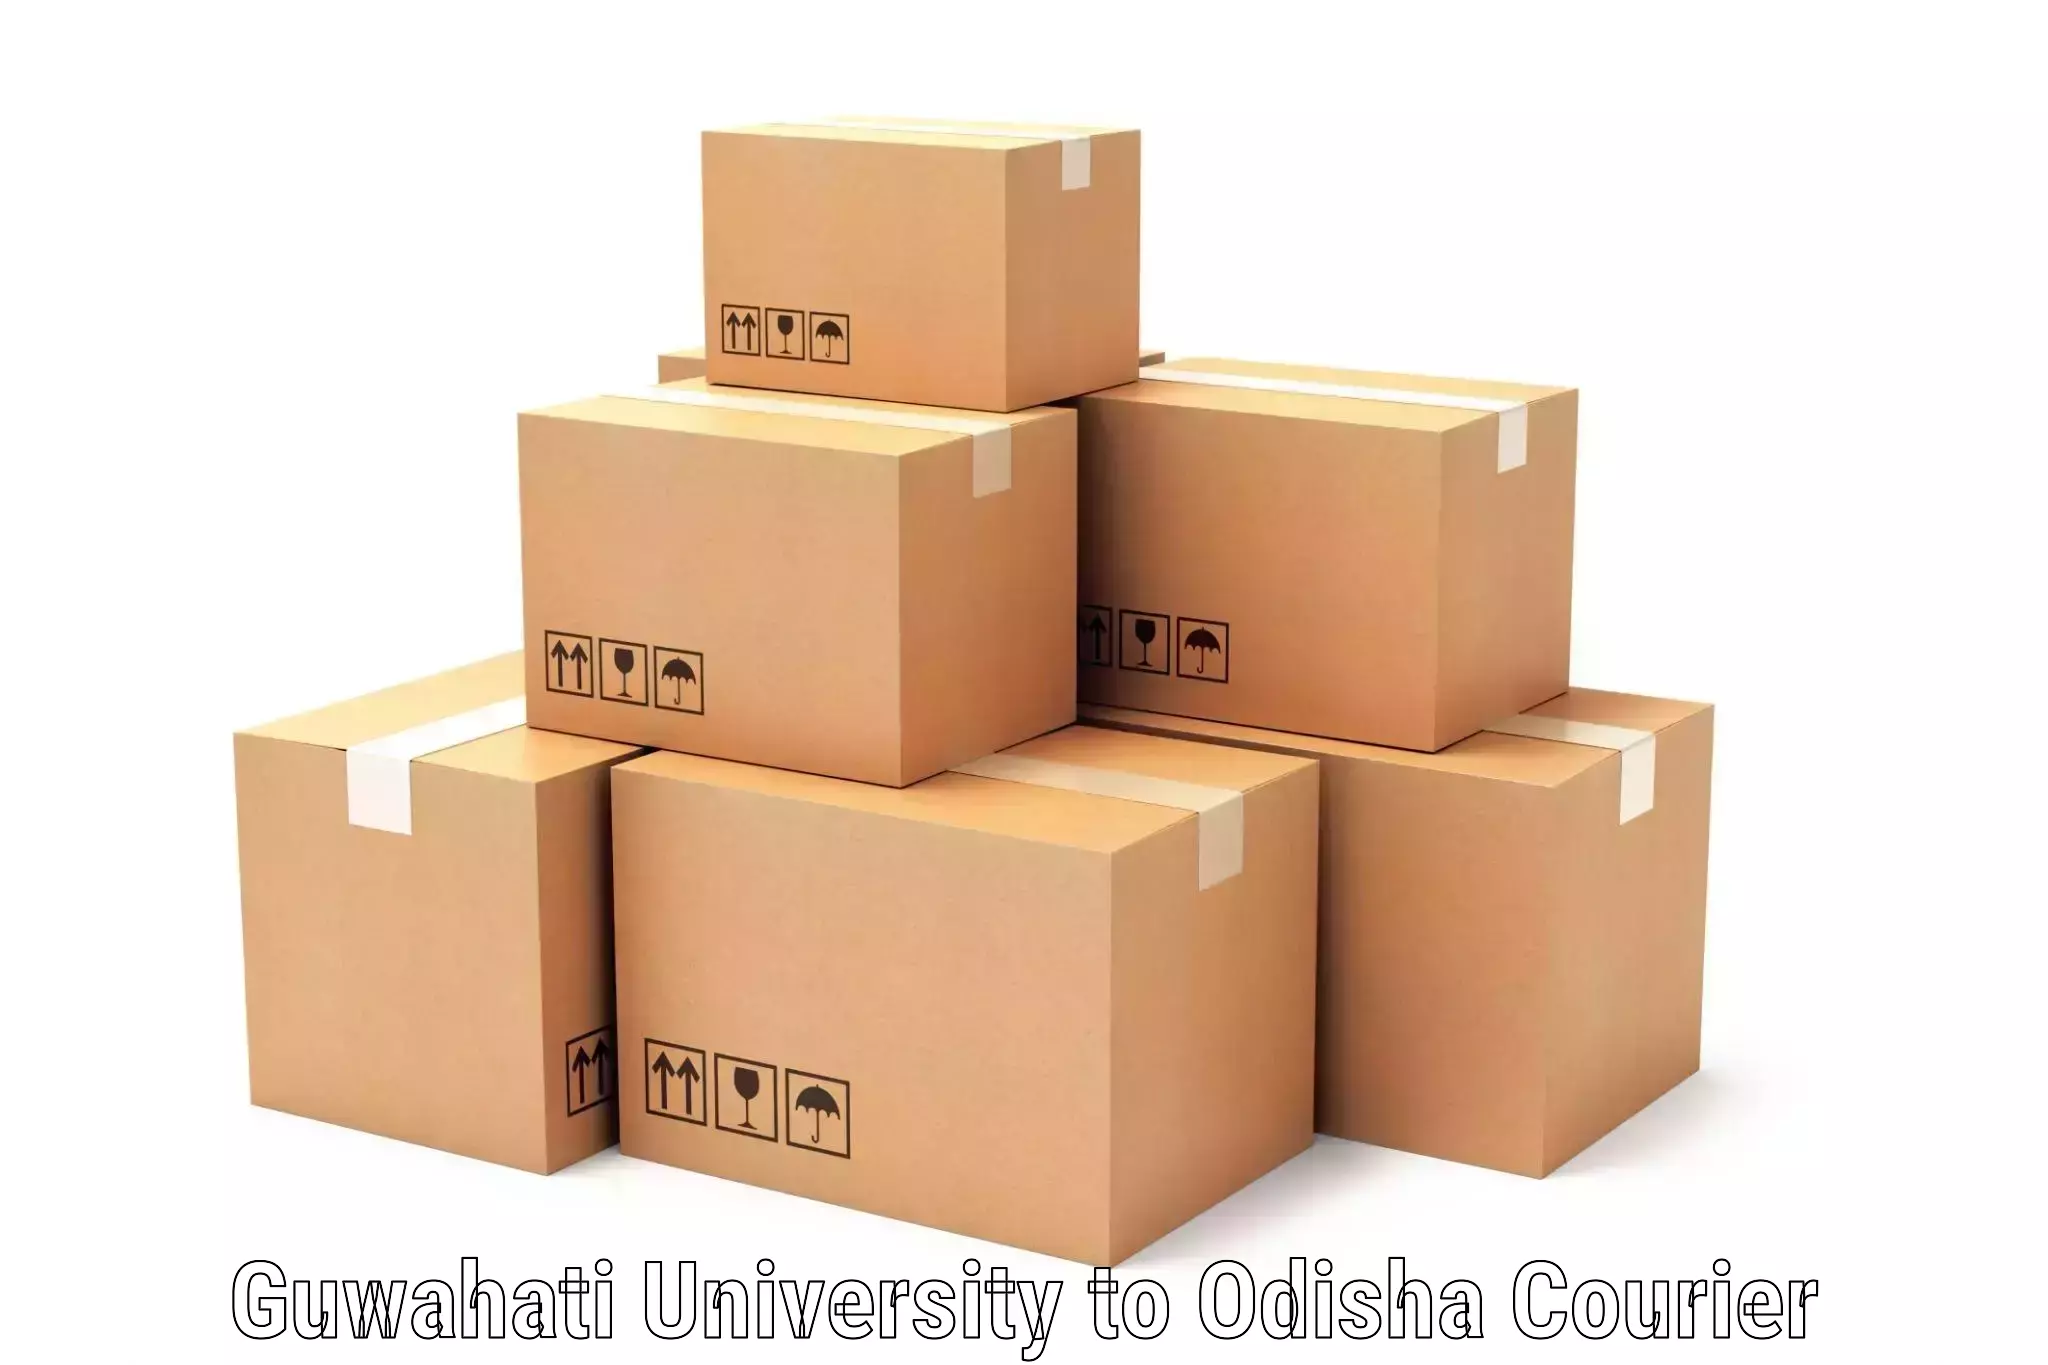 International parcel service Guwahati University to Parlakhemundi